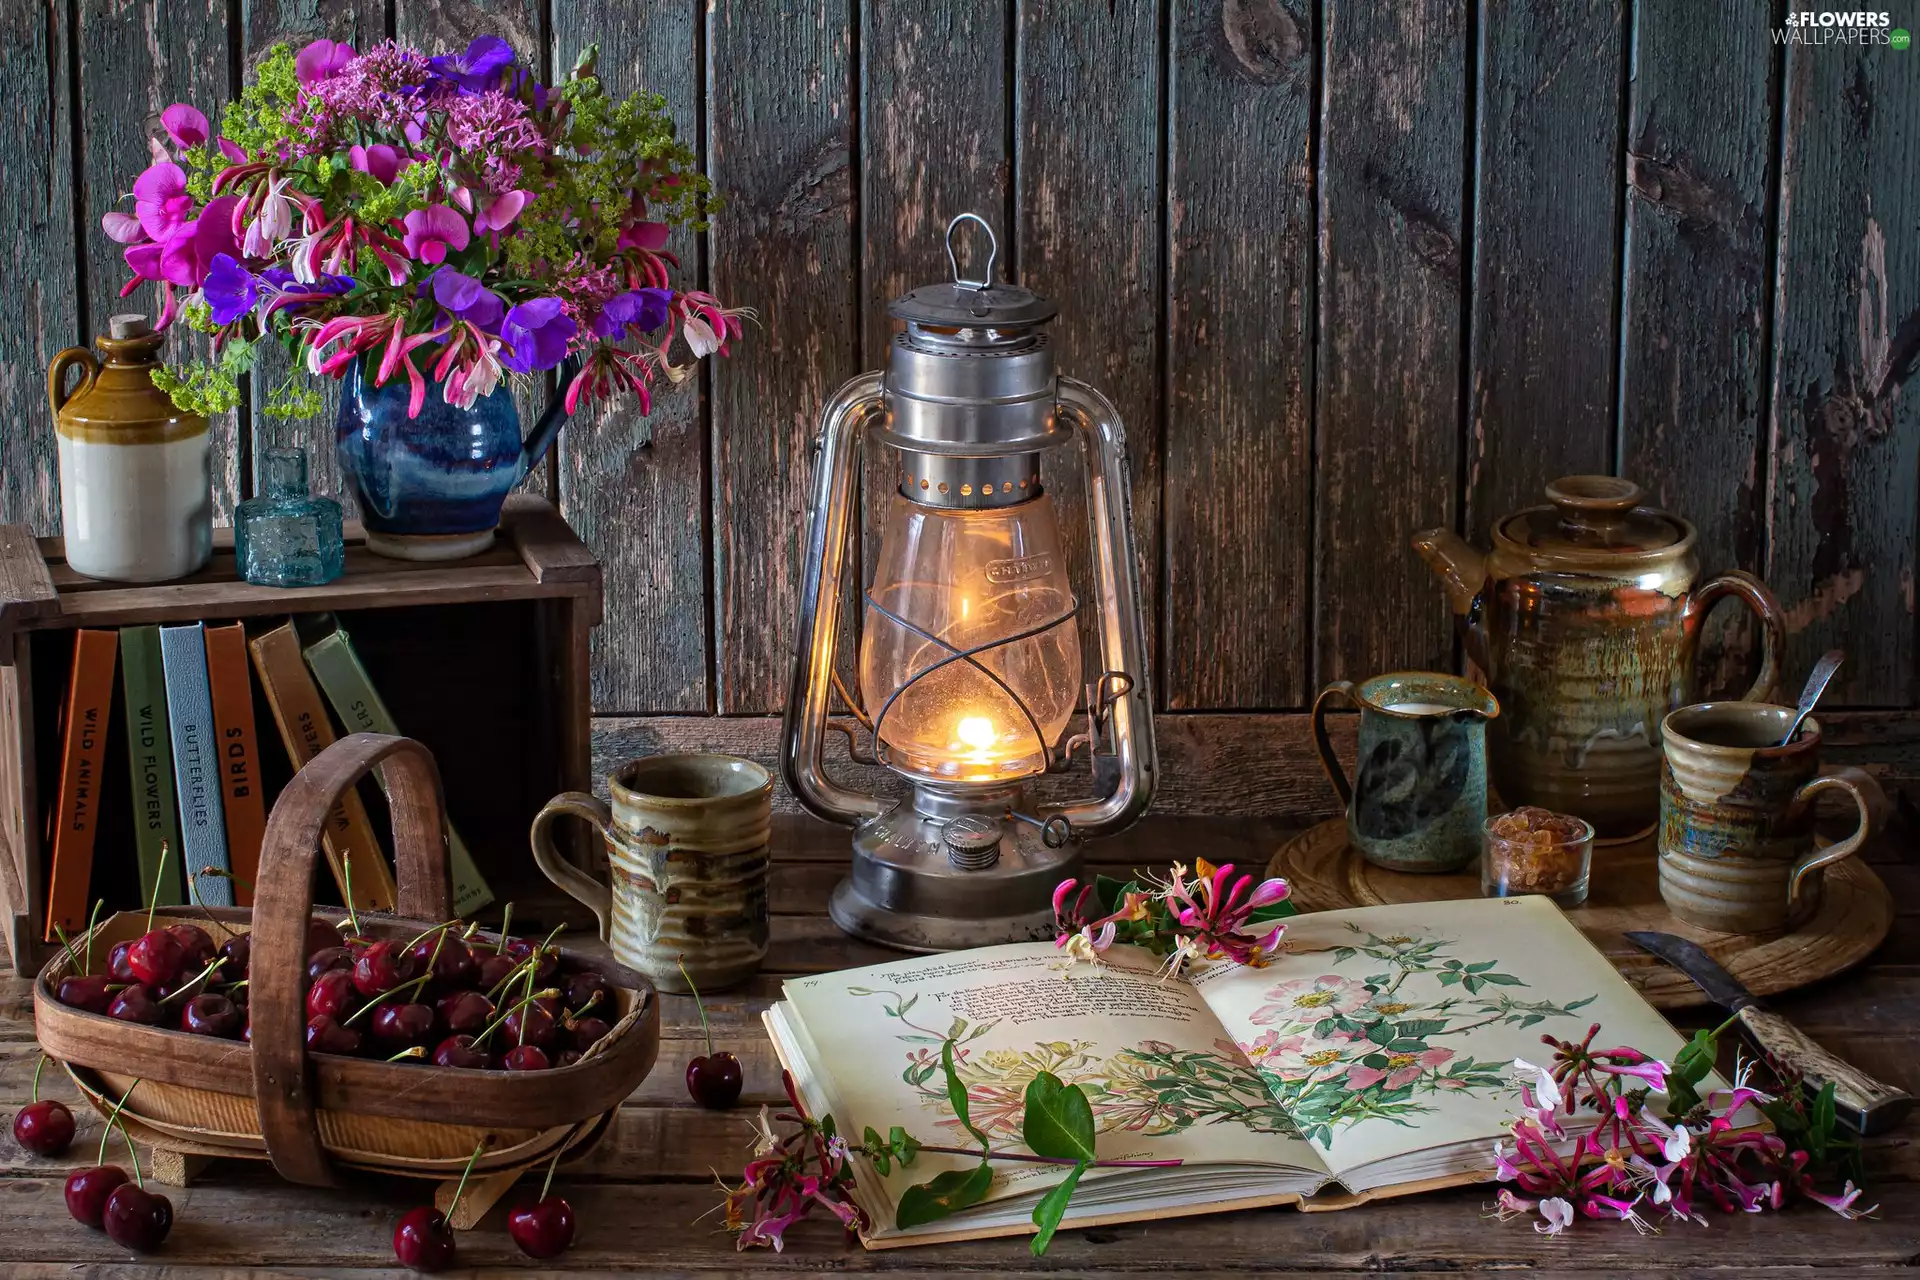 Lamp, Book, jug, basket, cups, Bouquet of Flowers, composition, cherries